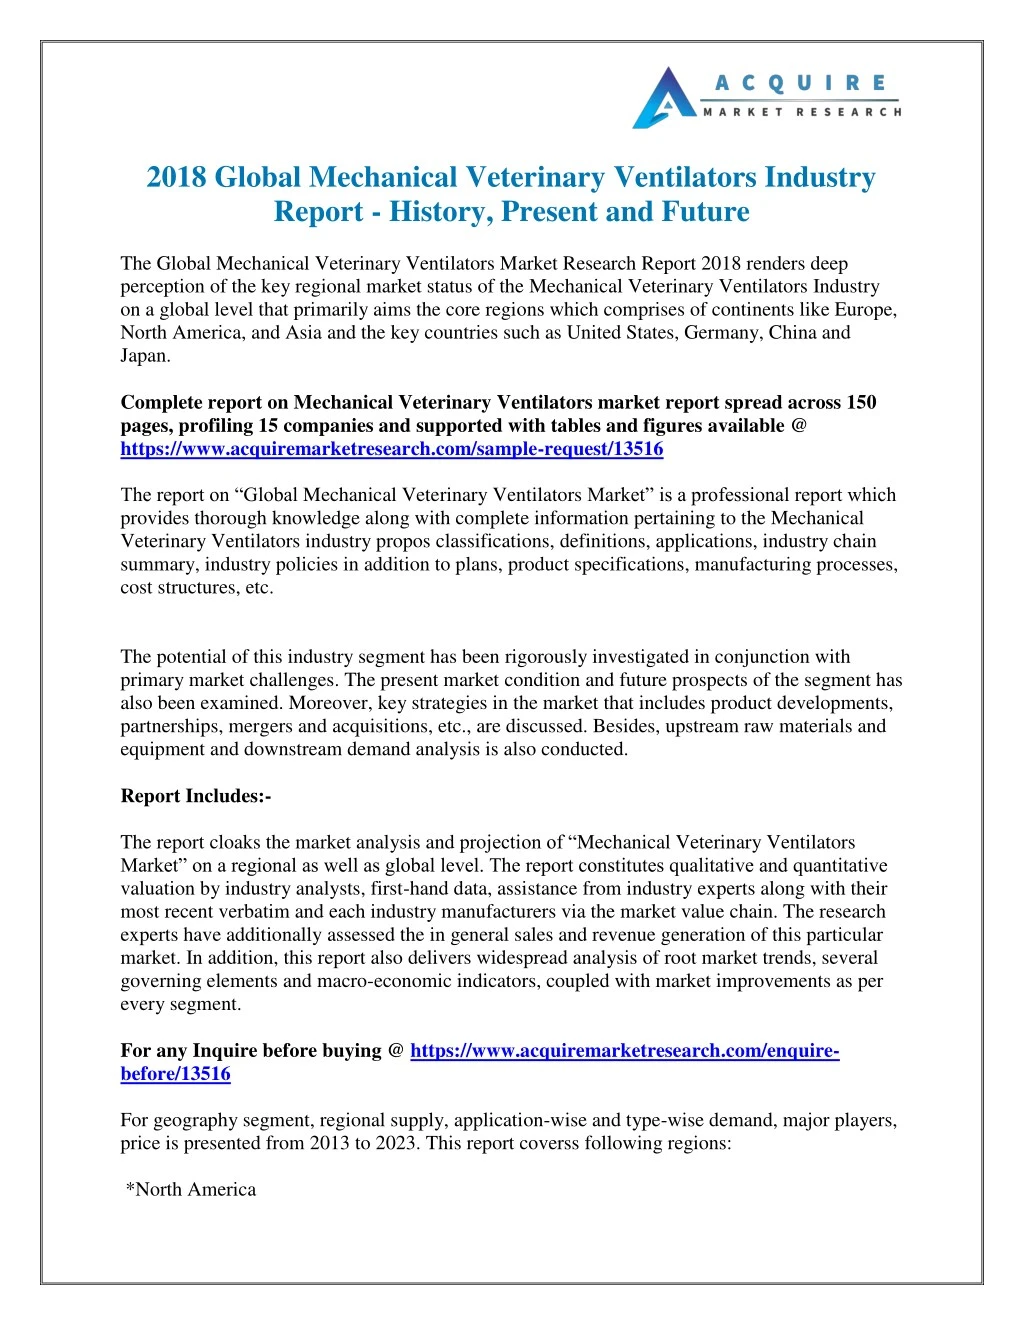 2018 global mechanical veterinary ventilators